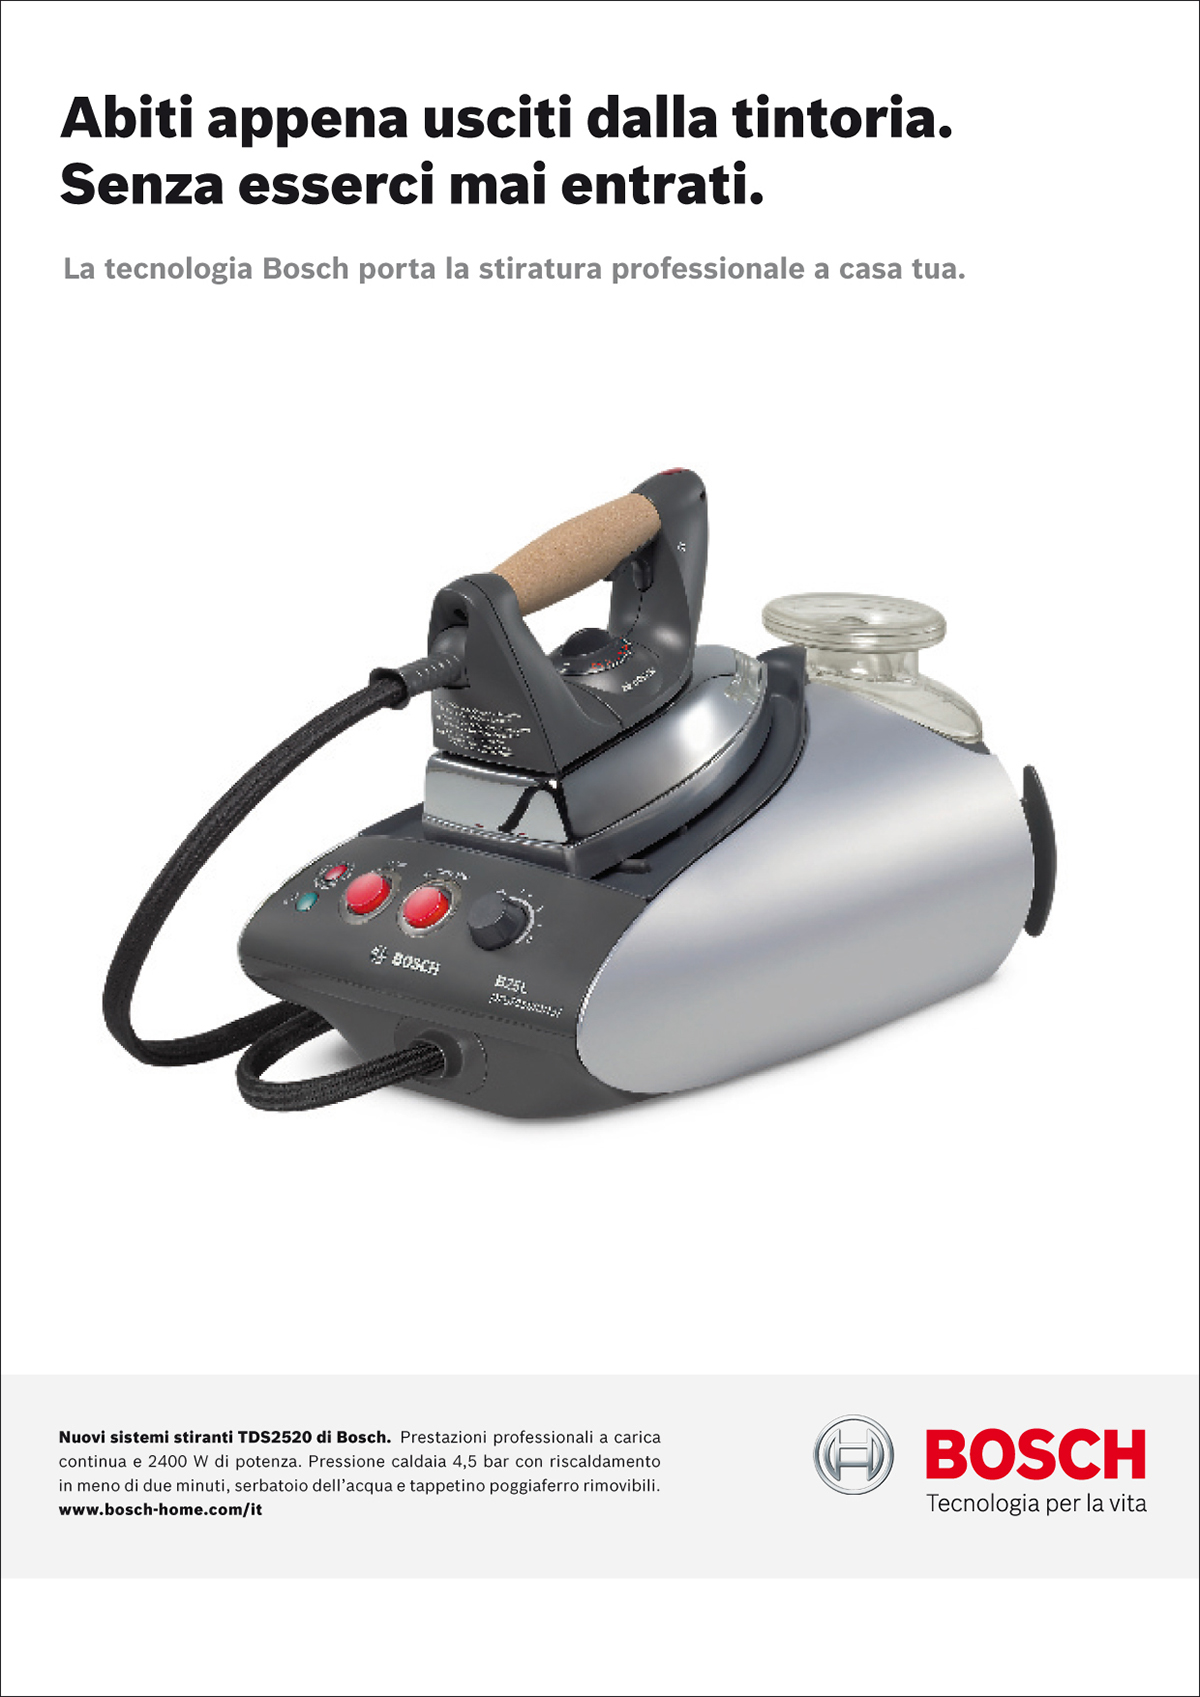 print stampa Advertising  Bosch copywriting  ADV creative Headline